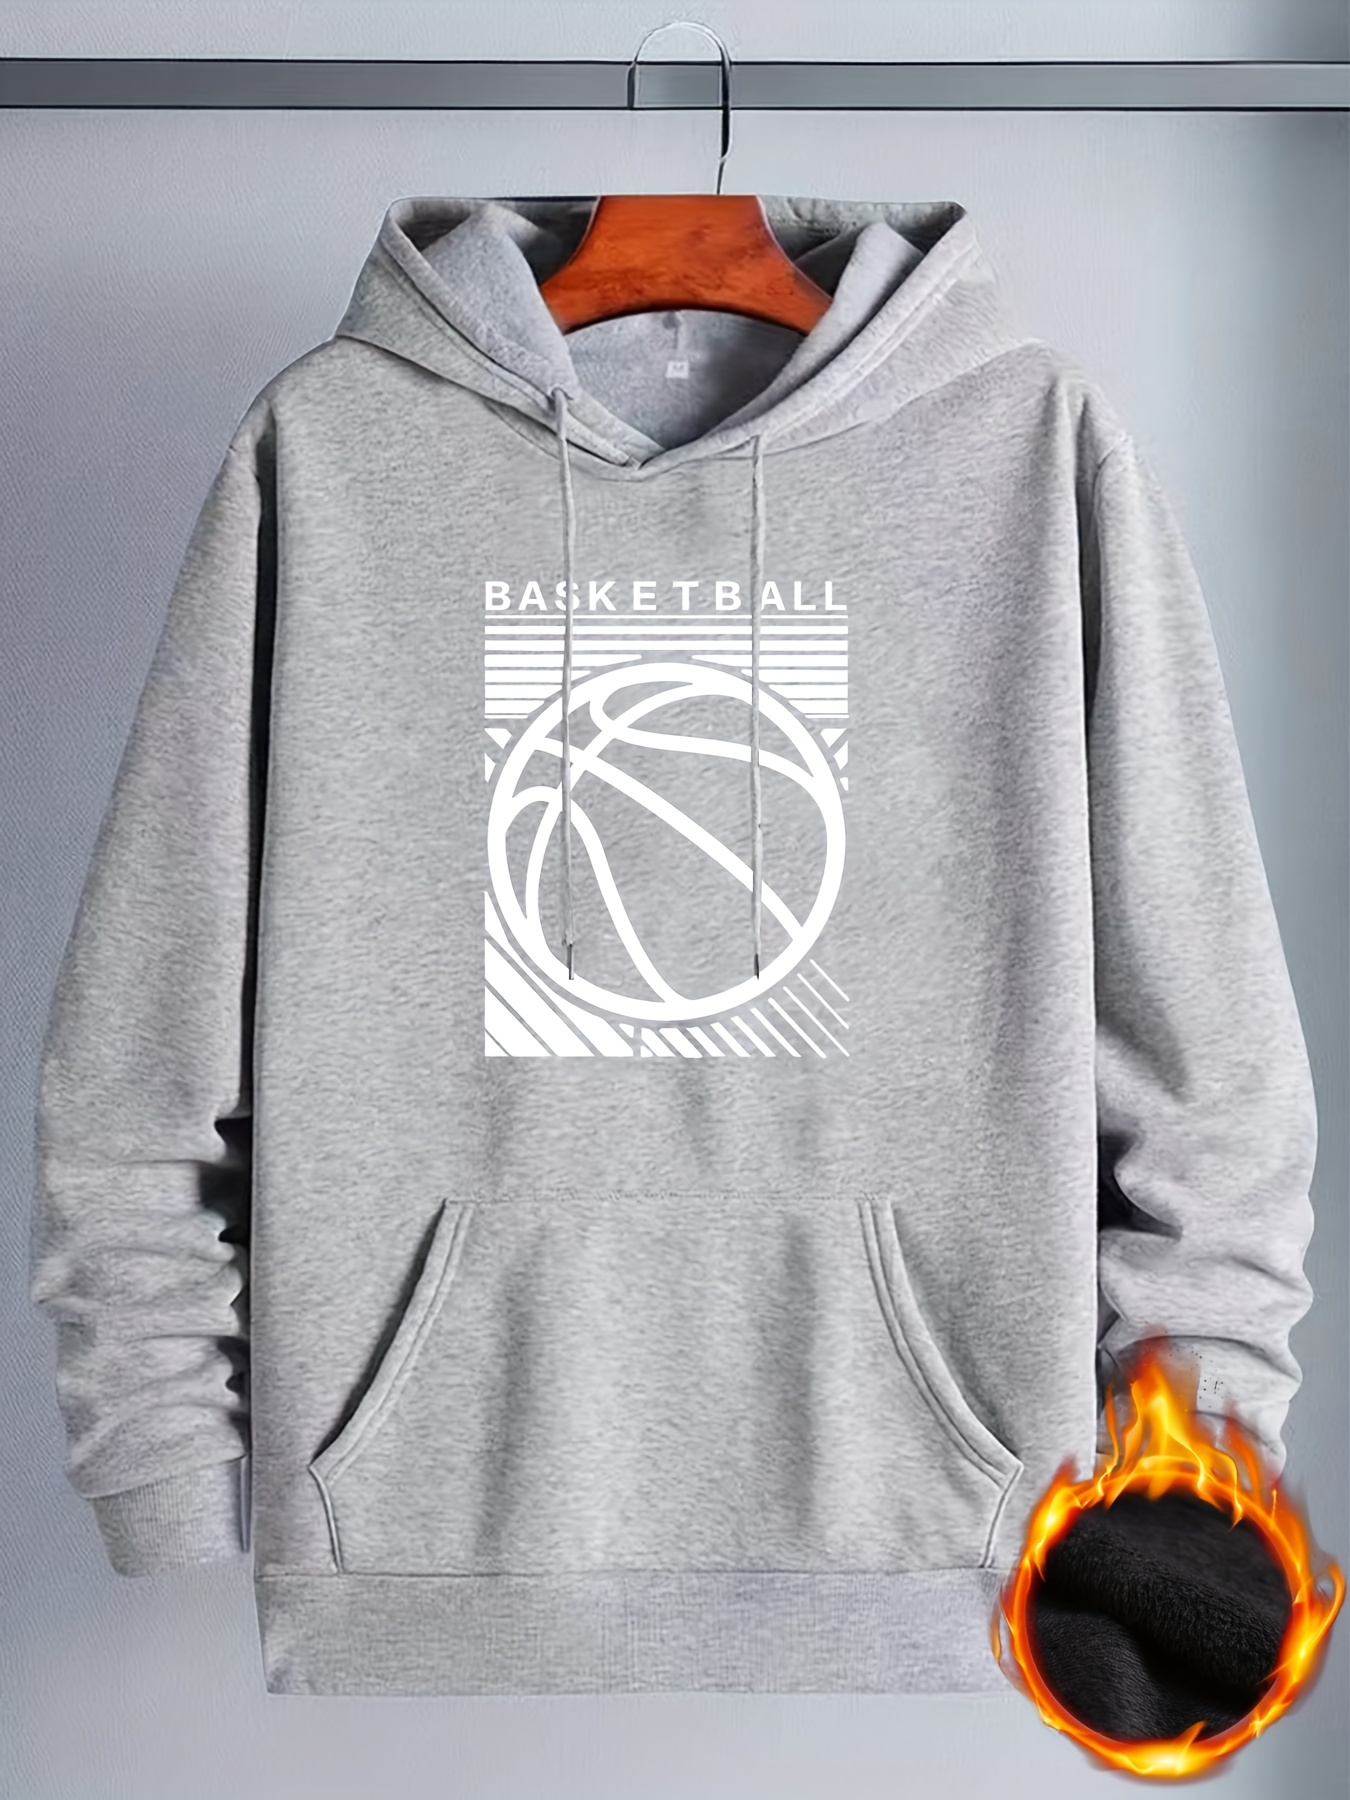 Retro Basketball Print Hoodie Cool Hoodies For Men Mens Casual